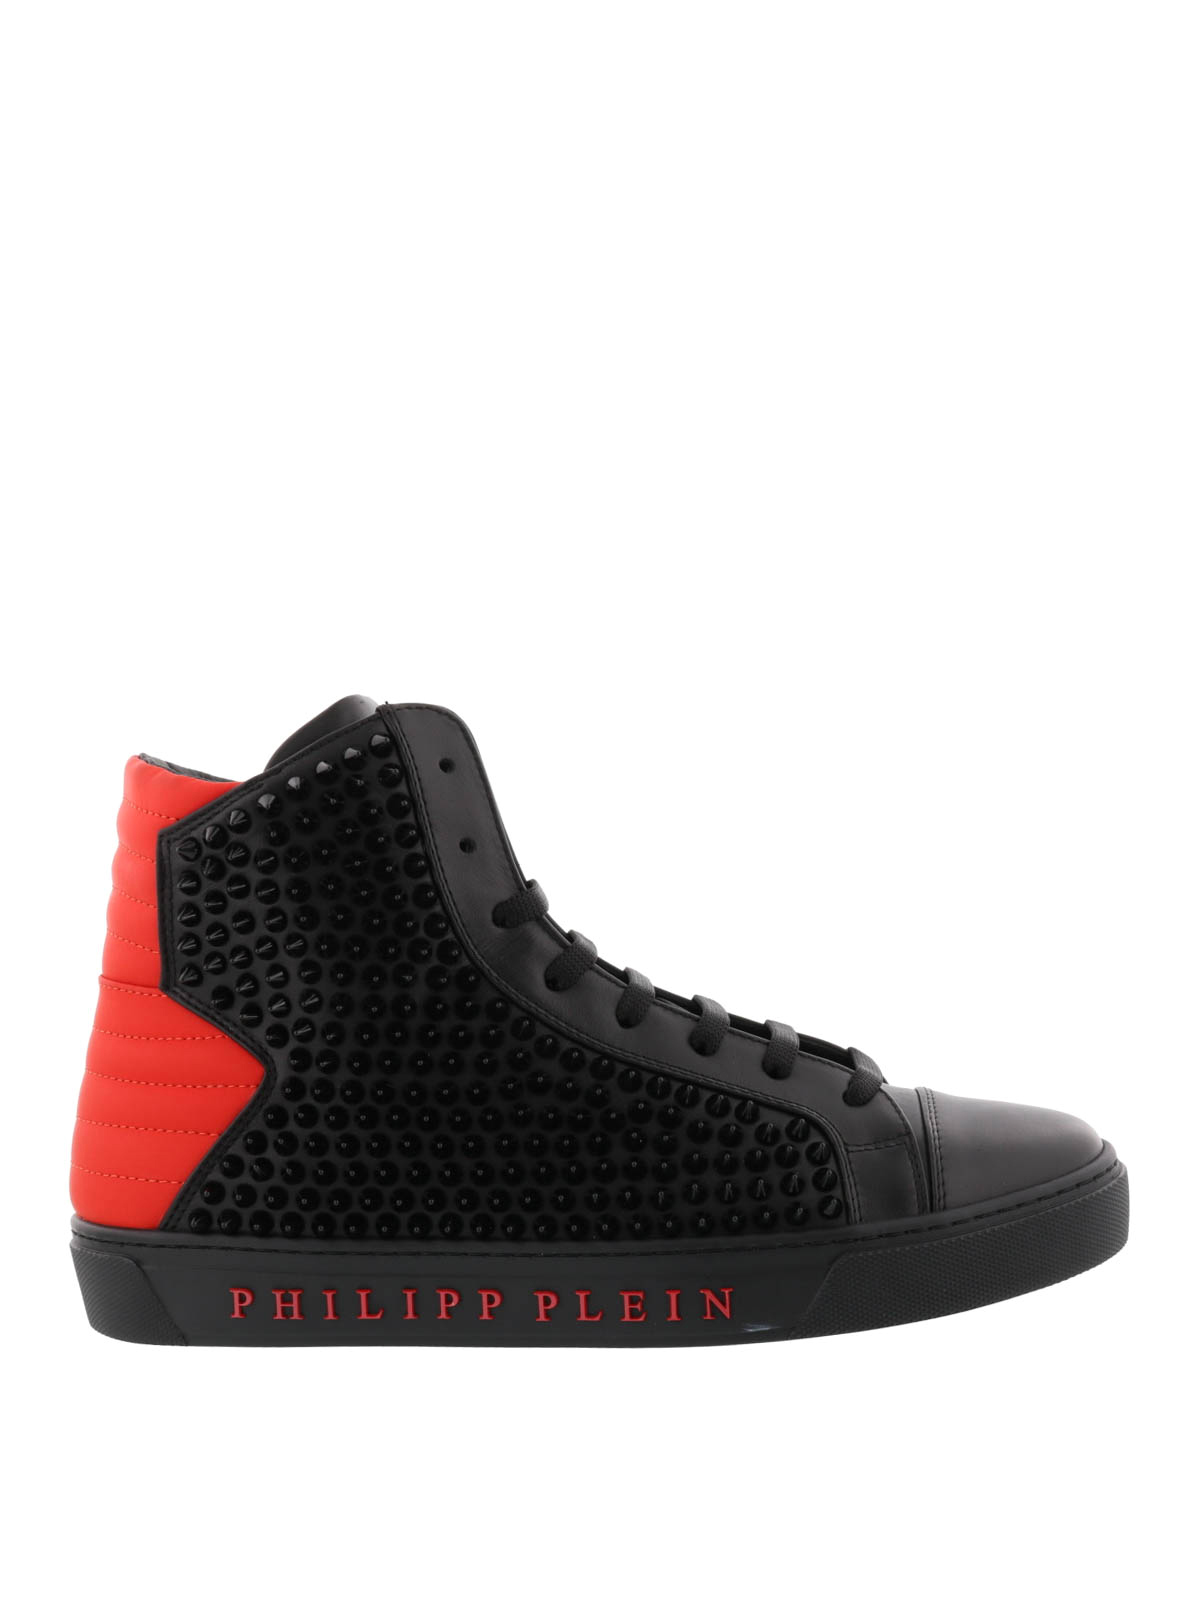 philipp plein black shoes